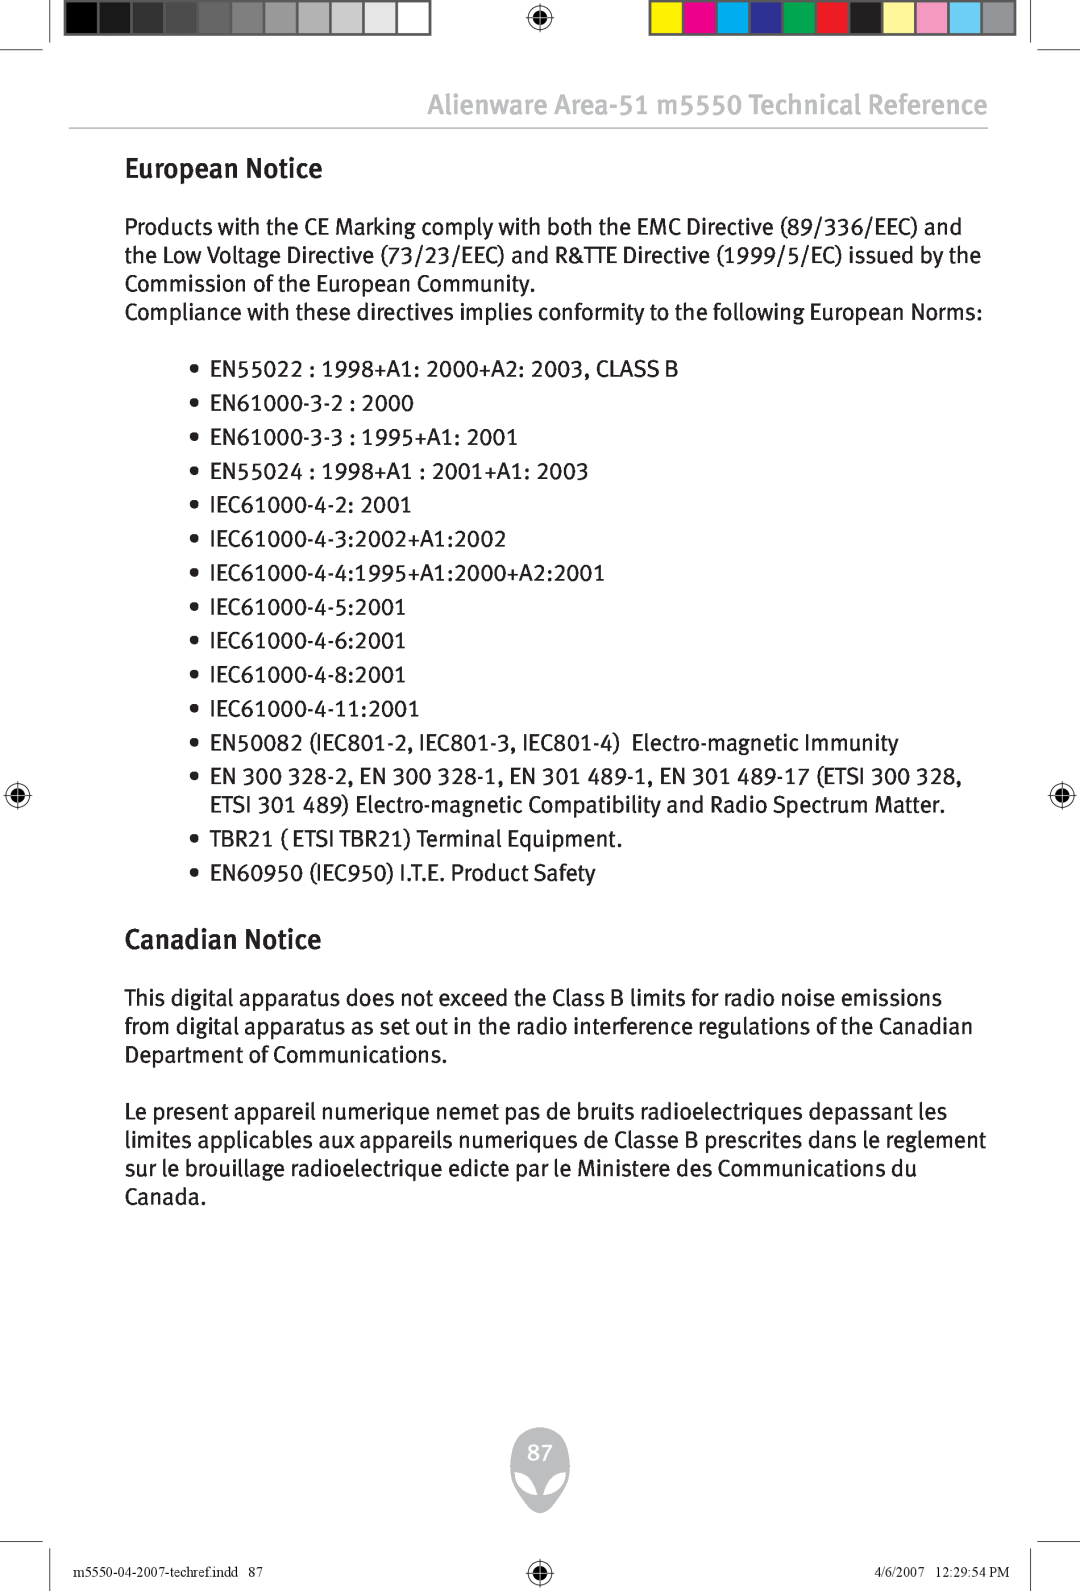 Alienware user manual European Notice, Canadian Notice, Alienware Area-51 m5550 Technical Reference 